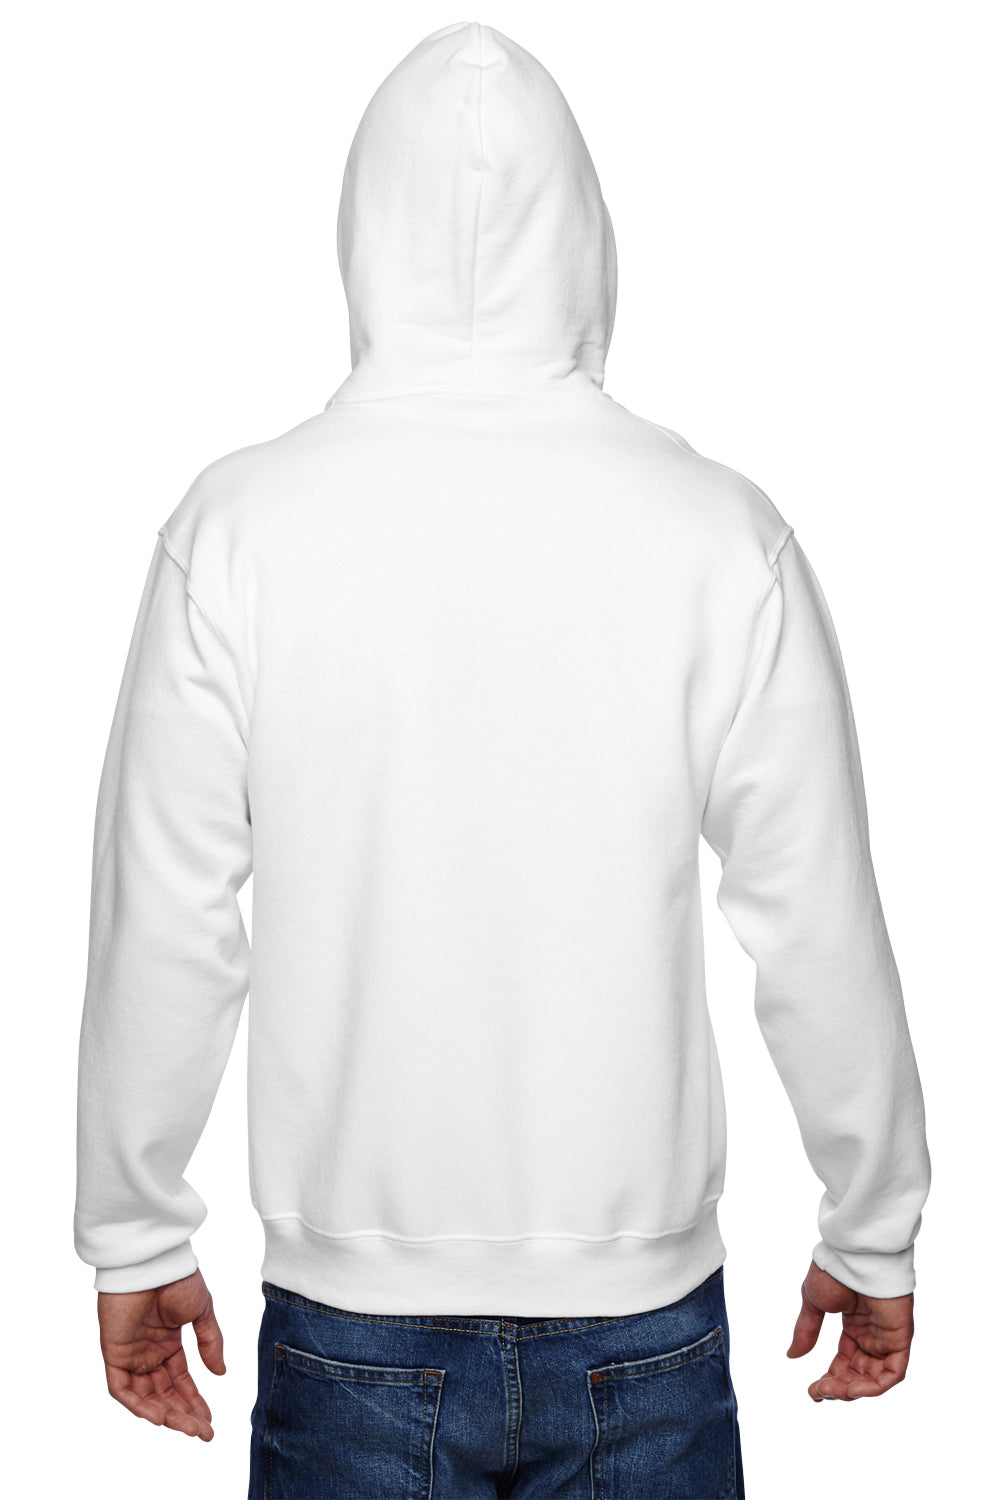 Jerzees 4999 Mens Super Sweats NuBlend Fleece Full Zip Hooded Sweatshirt Hoodie White Back